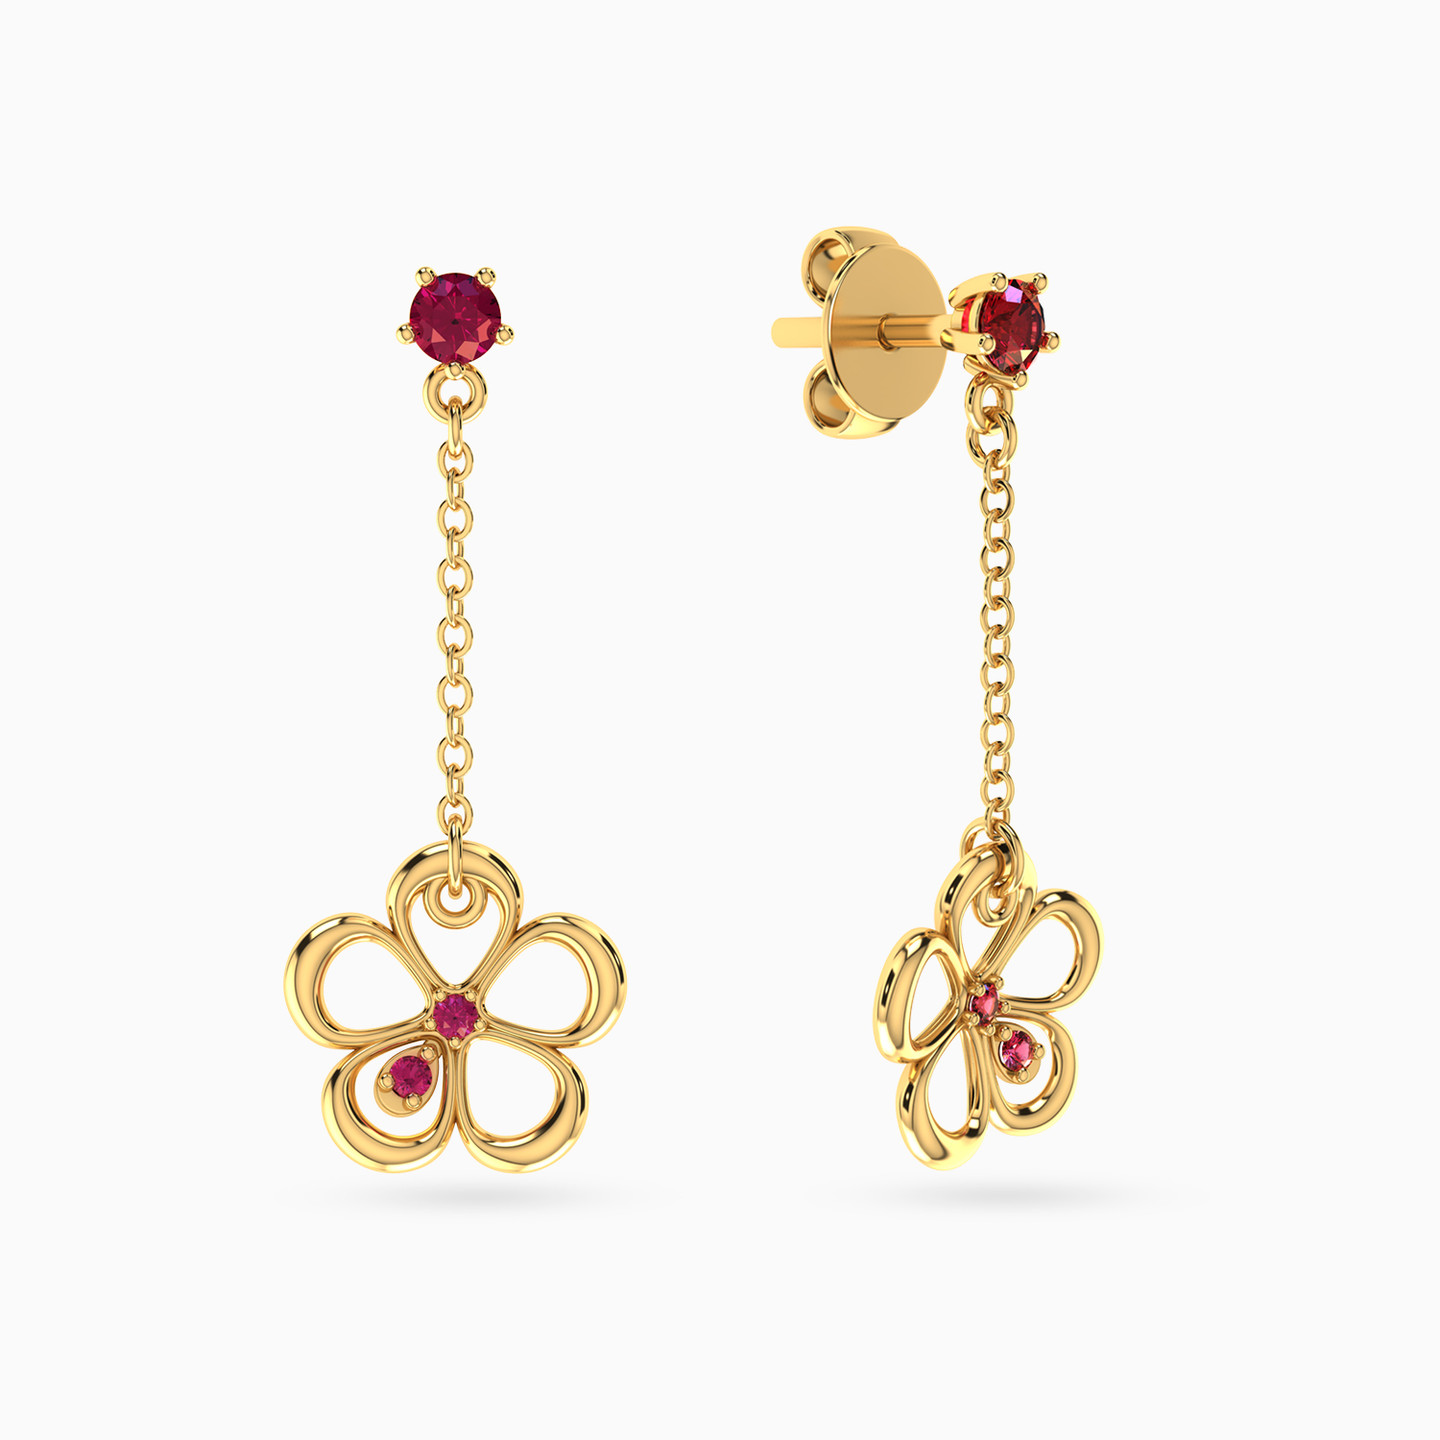 Flower Shaped Colored Stones Drop Earrings in 18K Gold - 2